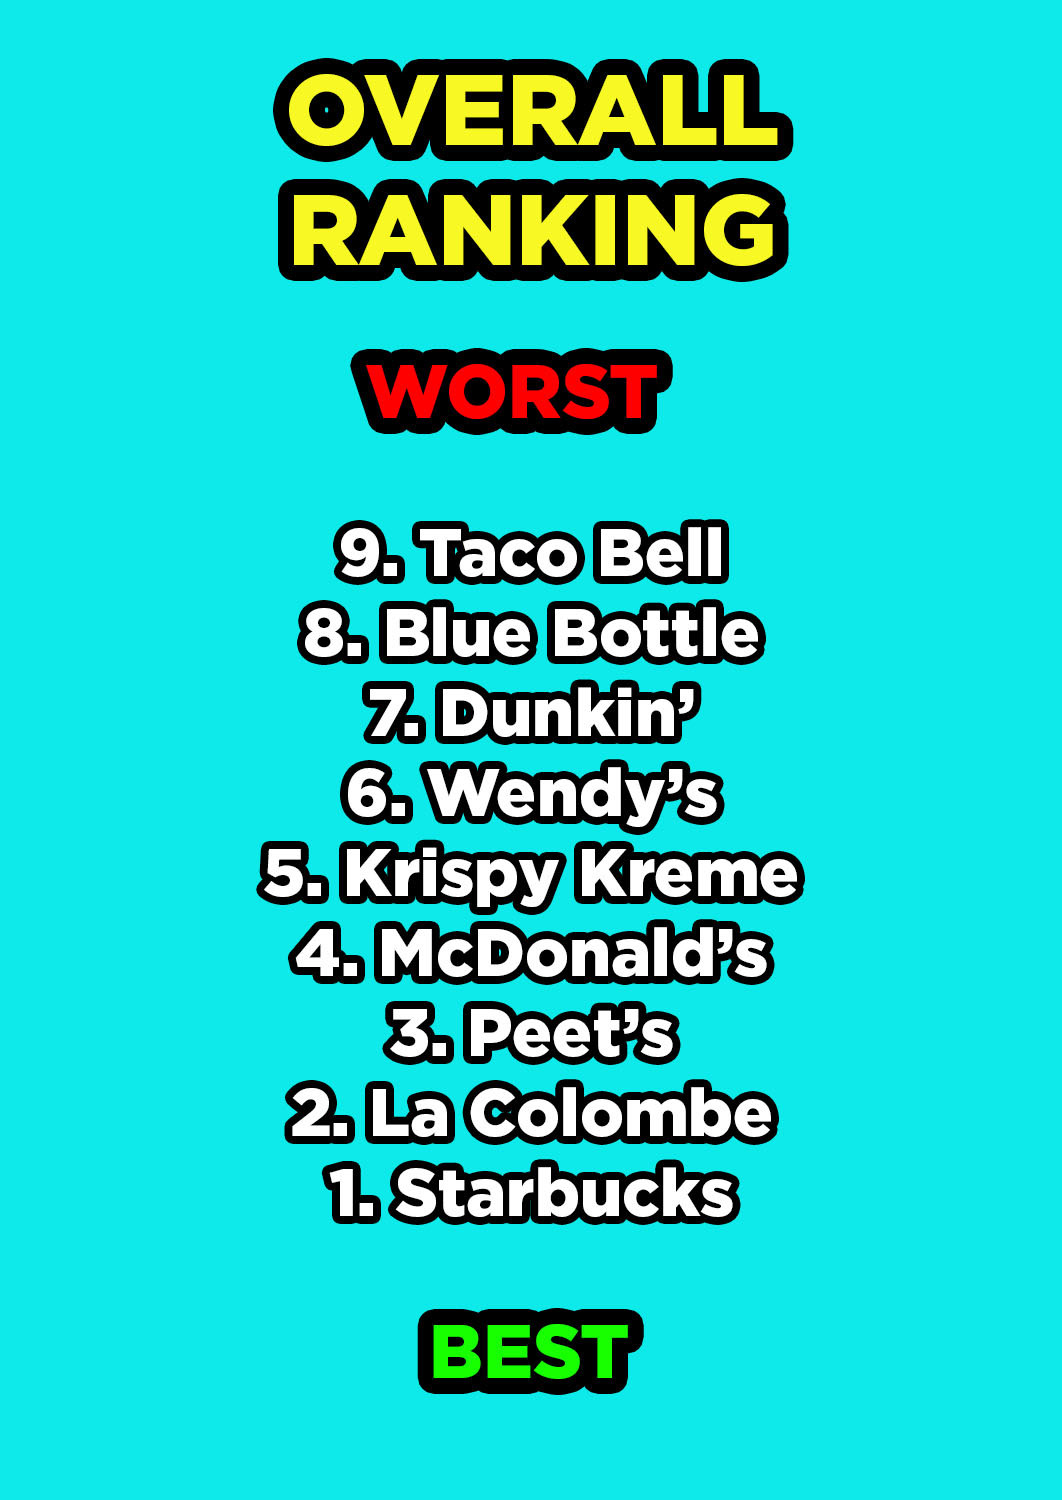 Overall ranking from worst to best: Taco Bell, Blue Bottle, Dunkin&#x27;, Wendy&#x27;s, Krispy Kreme, McDonald&#x27;s, Peet&#x27;s, La Colombe, Starbucks